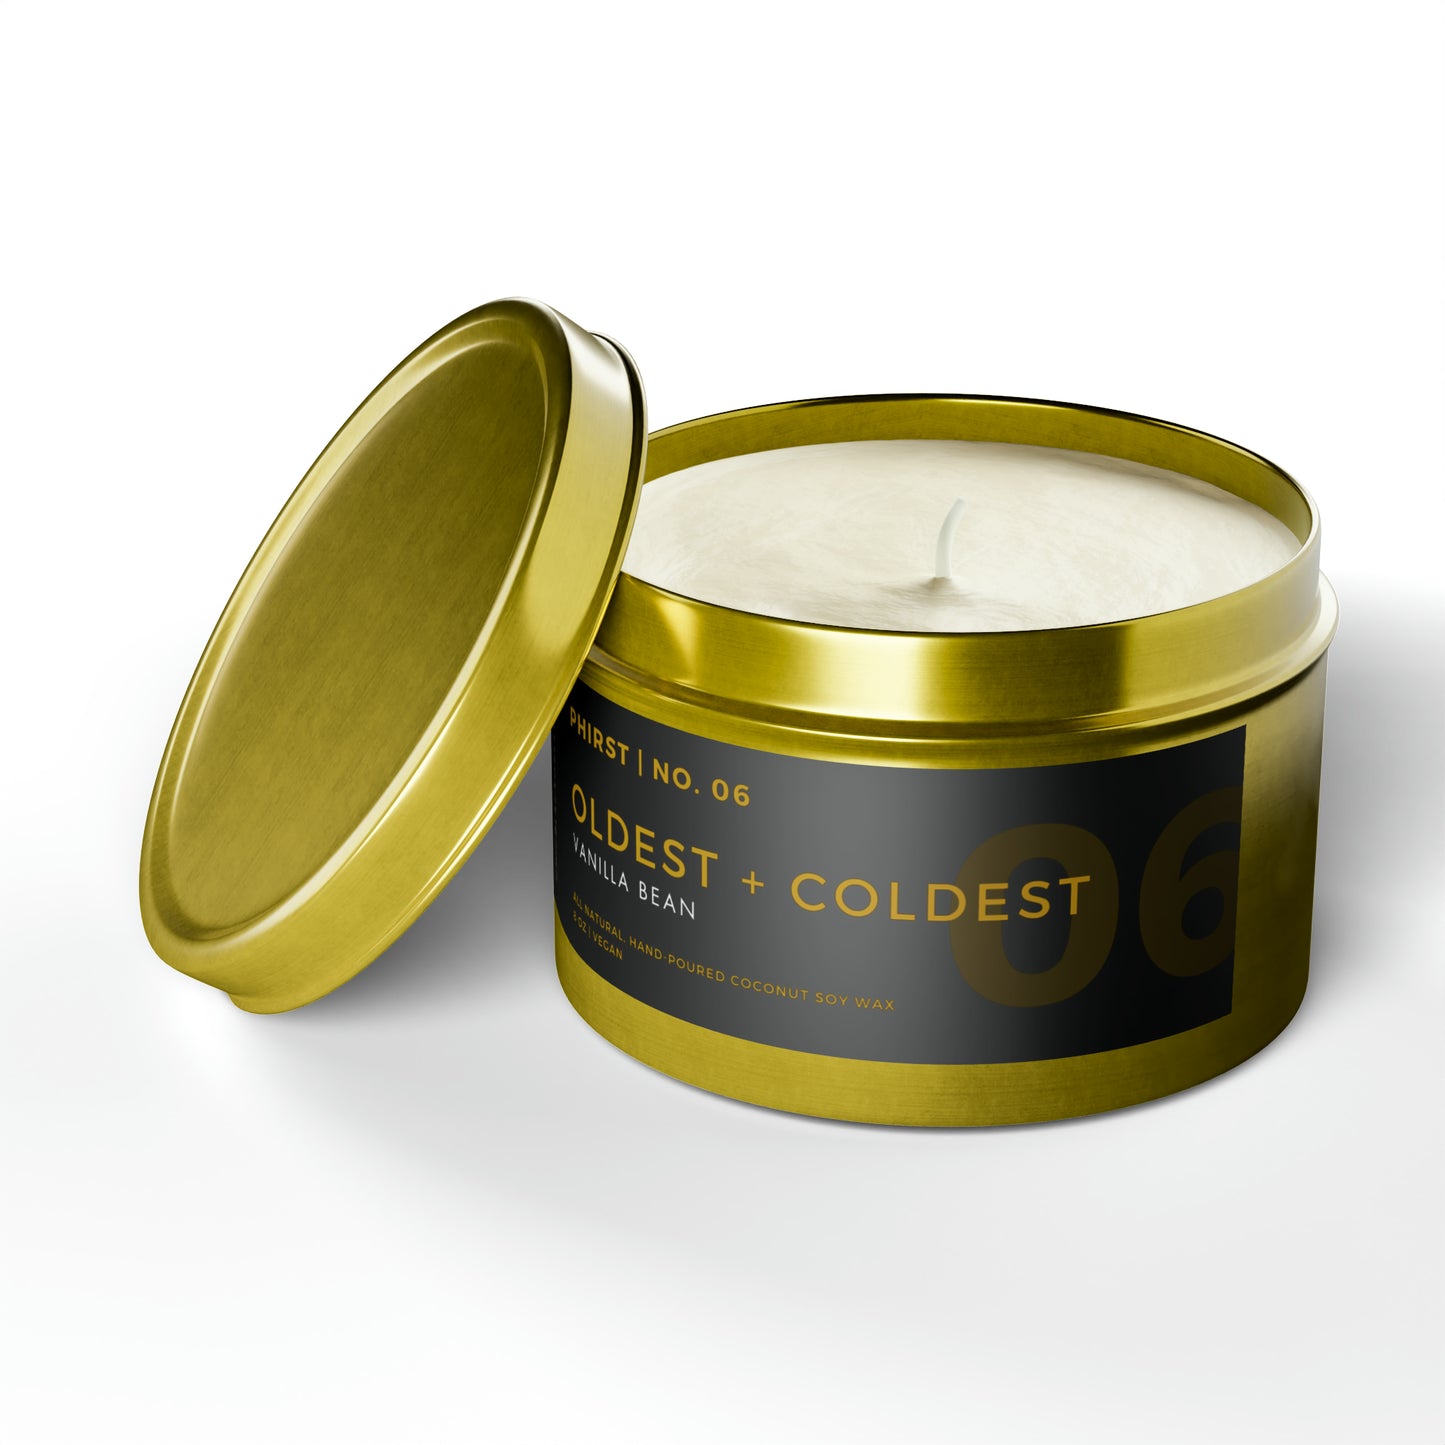 Phirst No. 06 Oldest + Coldest Candle | Vanilla Bean